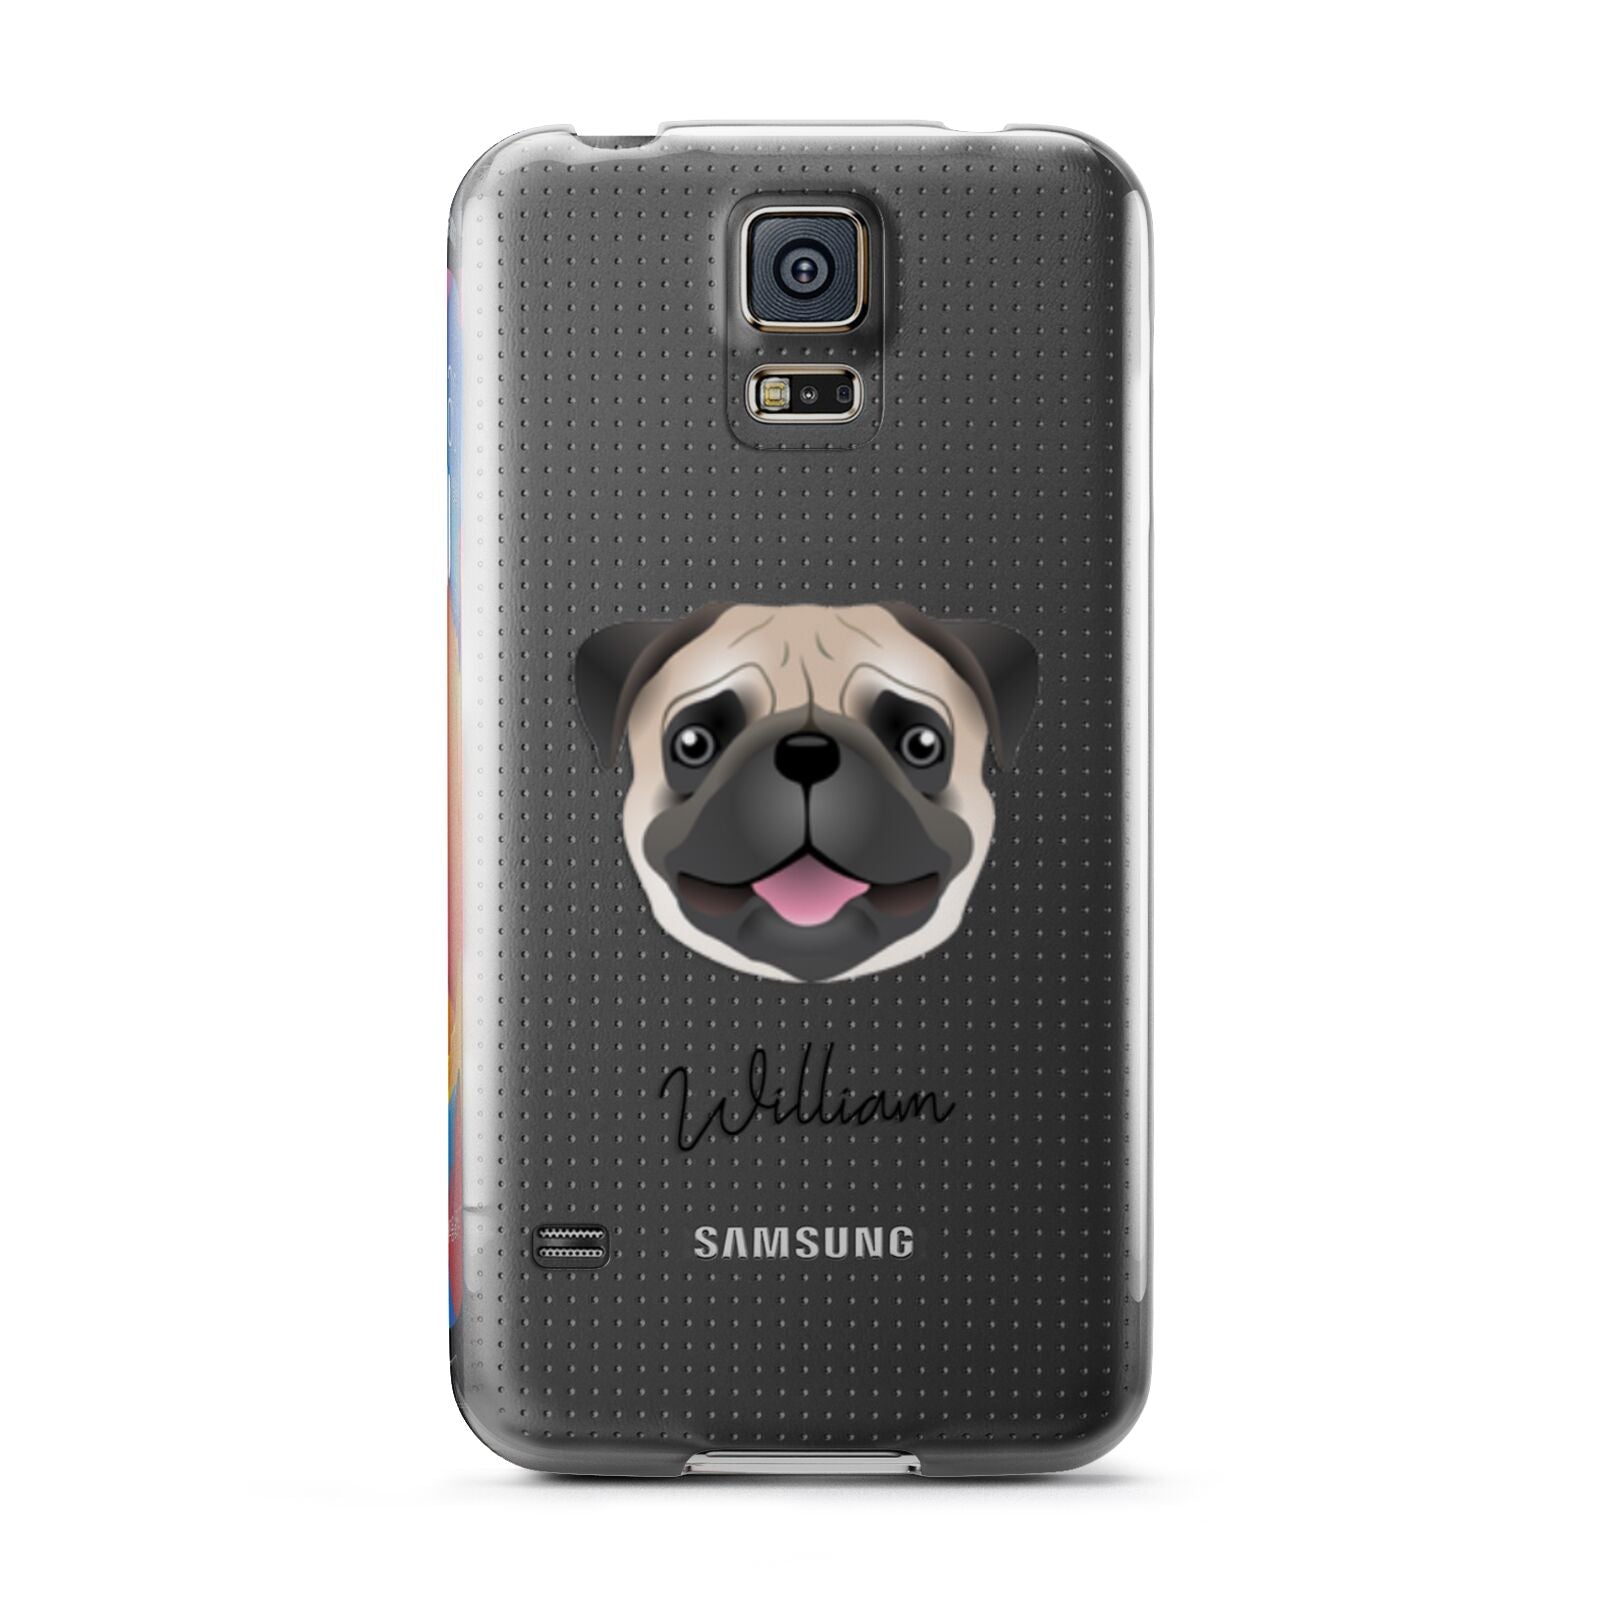 Pug Personalised Samsung Galaxy S5 Case